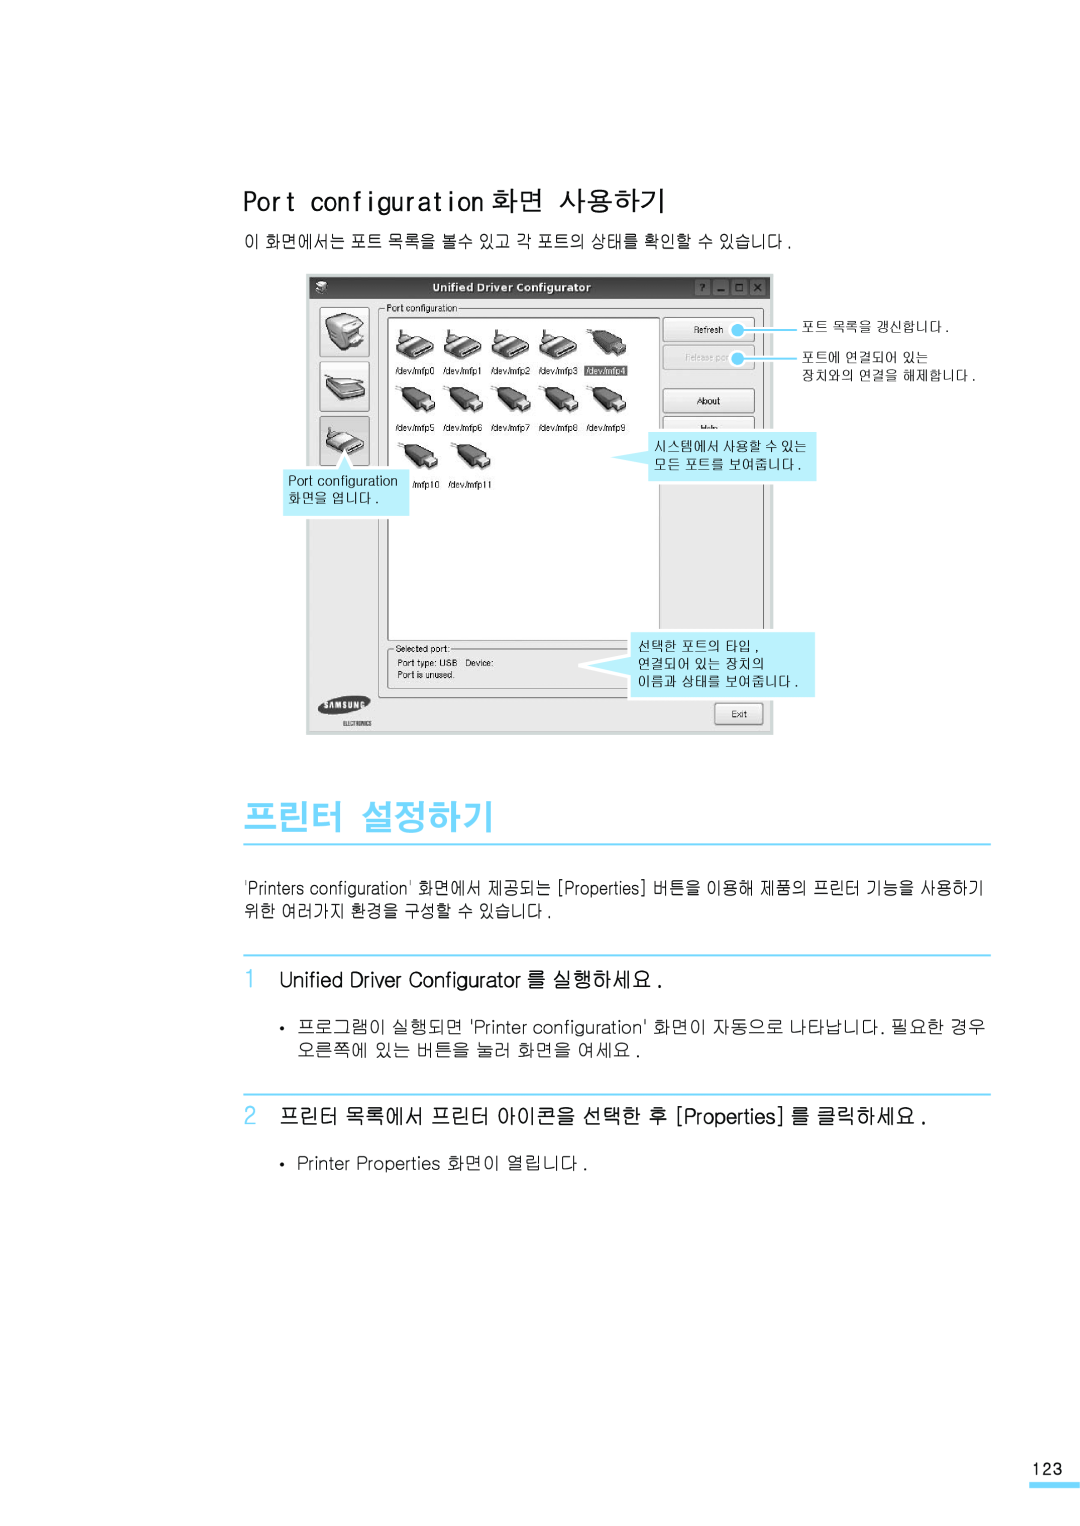 Samsung ML-2571N manual Port configuration 화면 사용하기, 프린터 설정하기, Unified Driver Configurator 를 실행하세요 